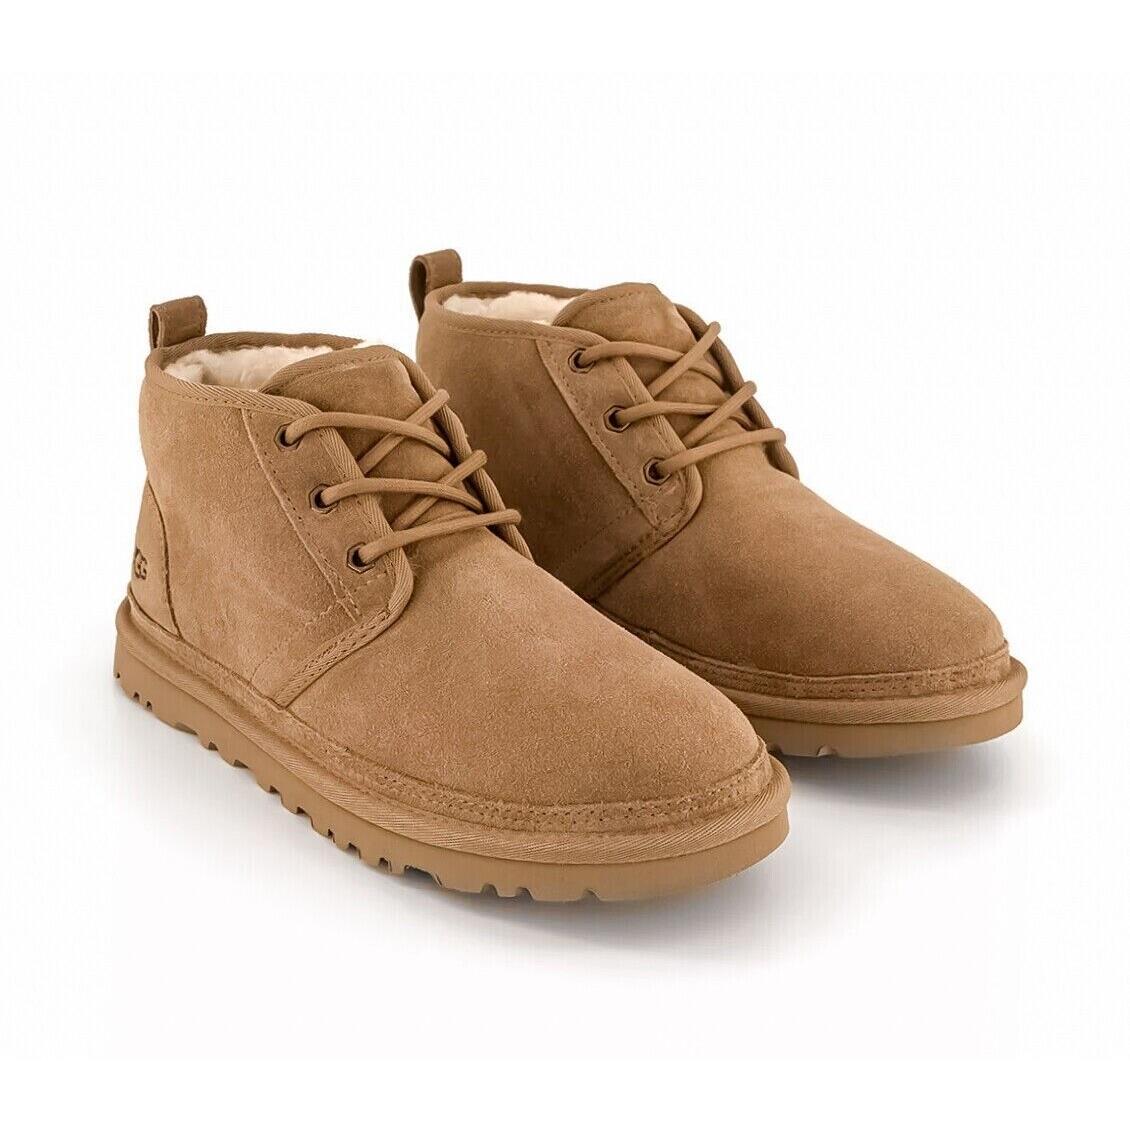 Brand Ugg Women`s Iconic Neumel Chestnut Chukka Boots Shoes 1094269